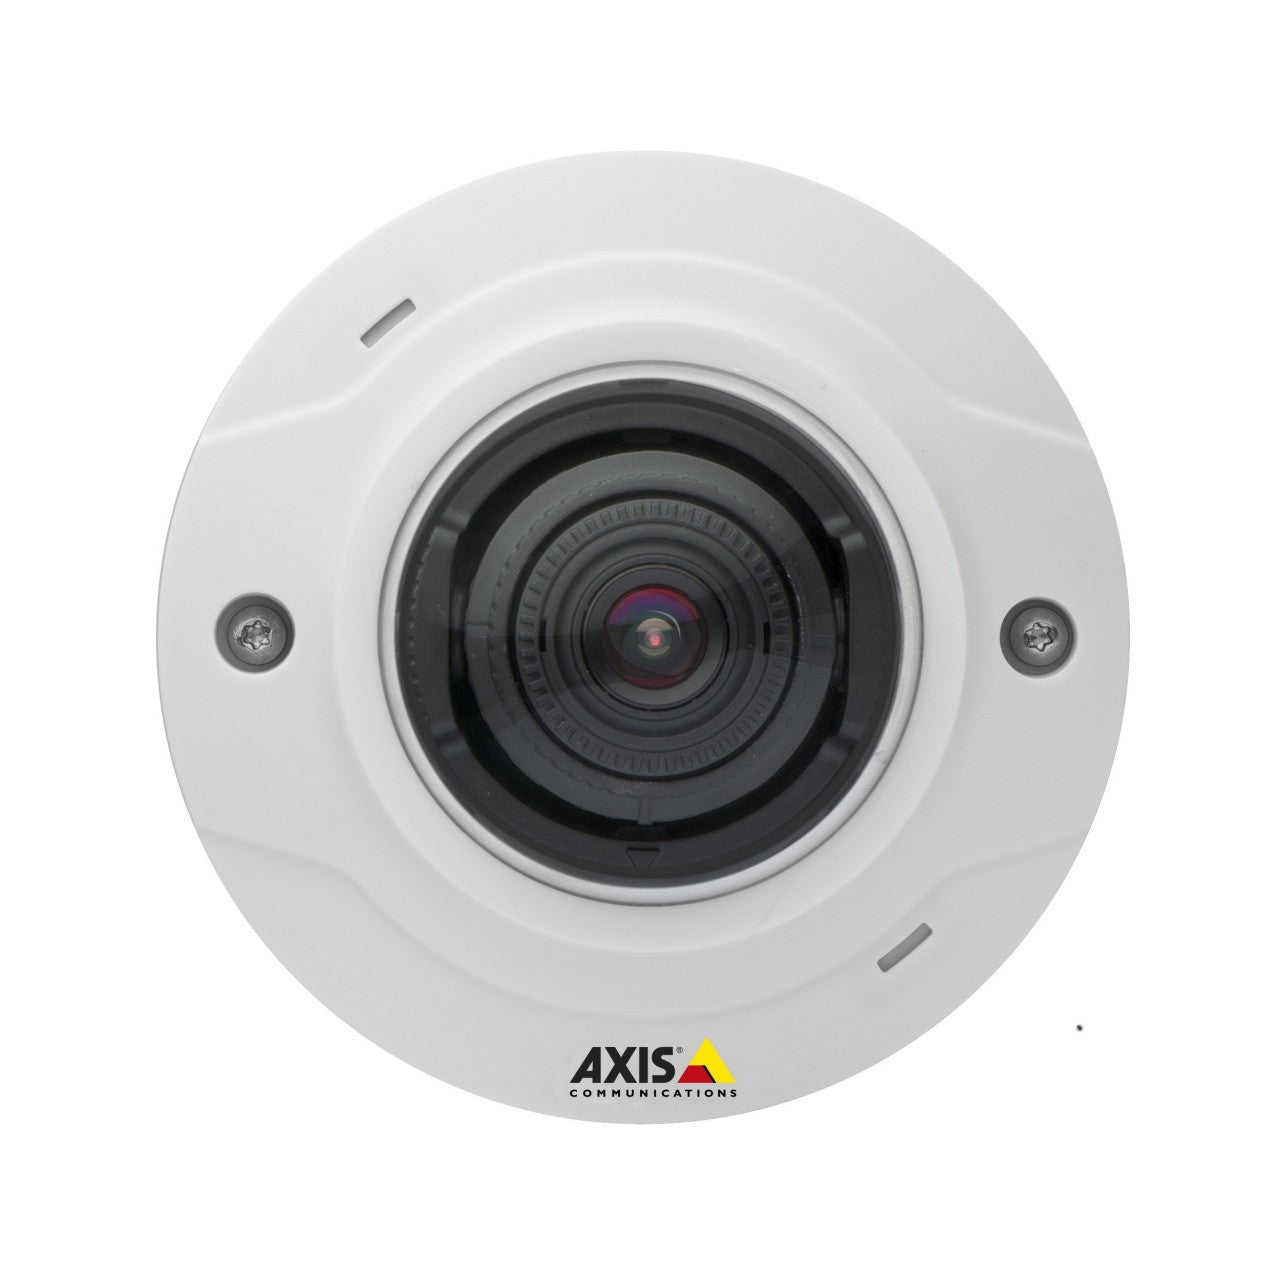 AXIS M3004-V (0516-001) HDTV Fixed Dome Network Camera